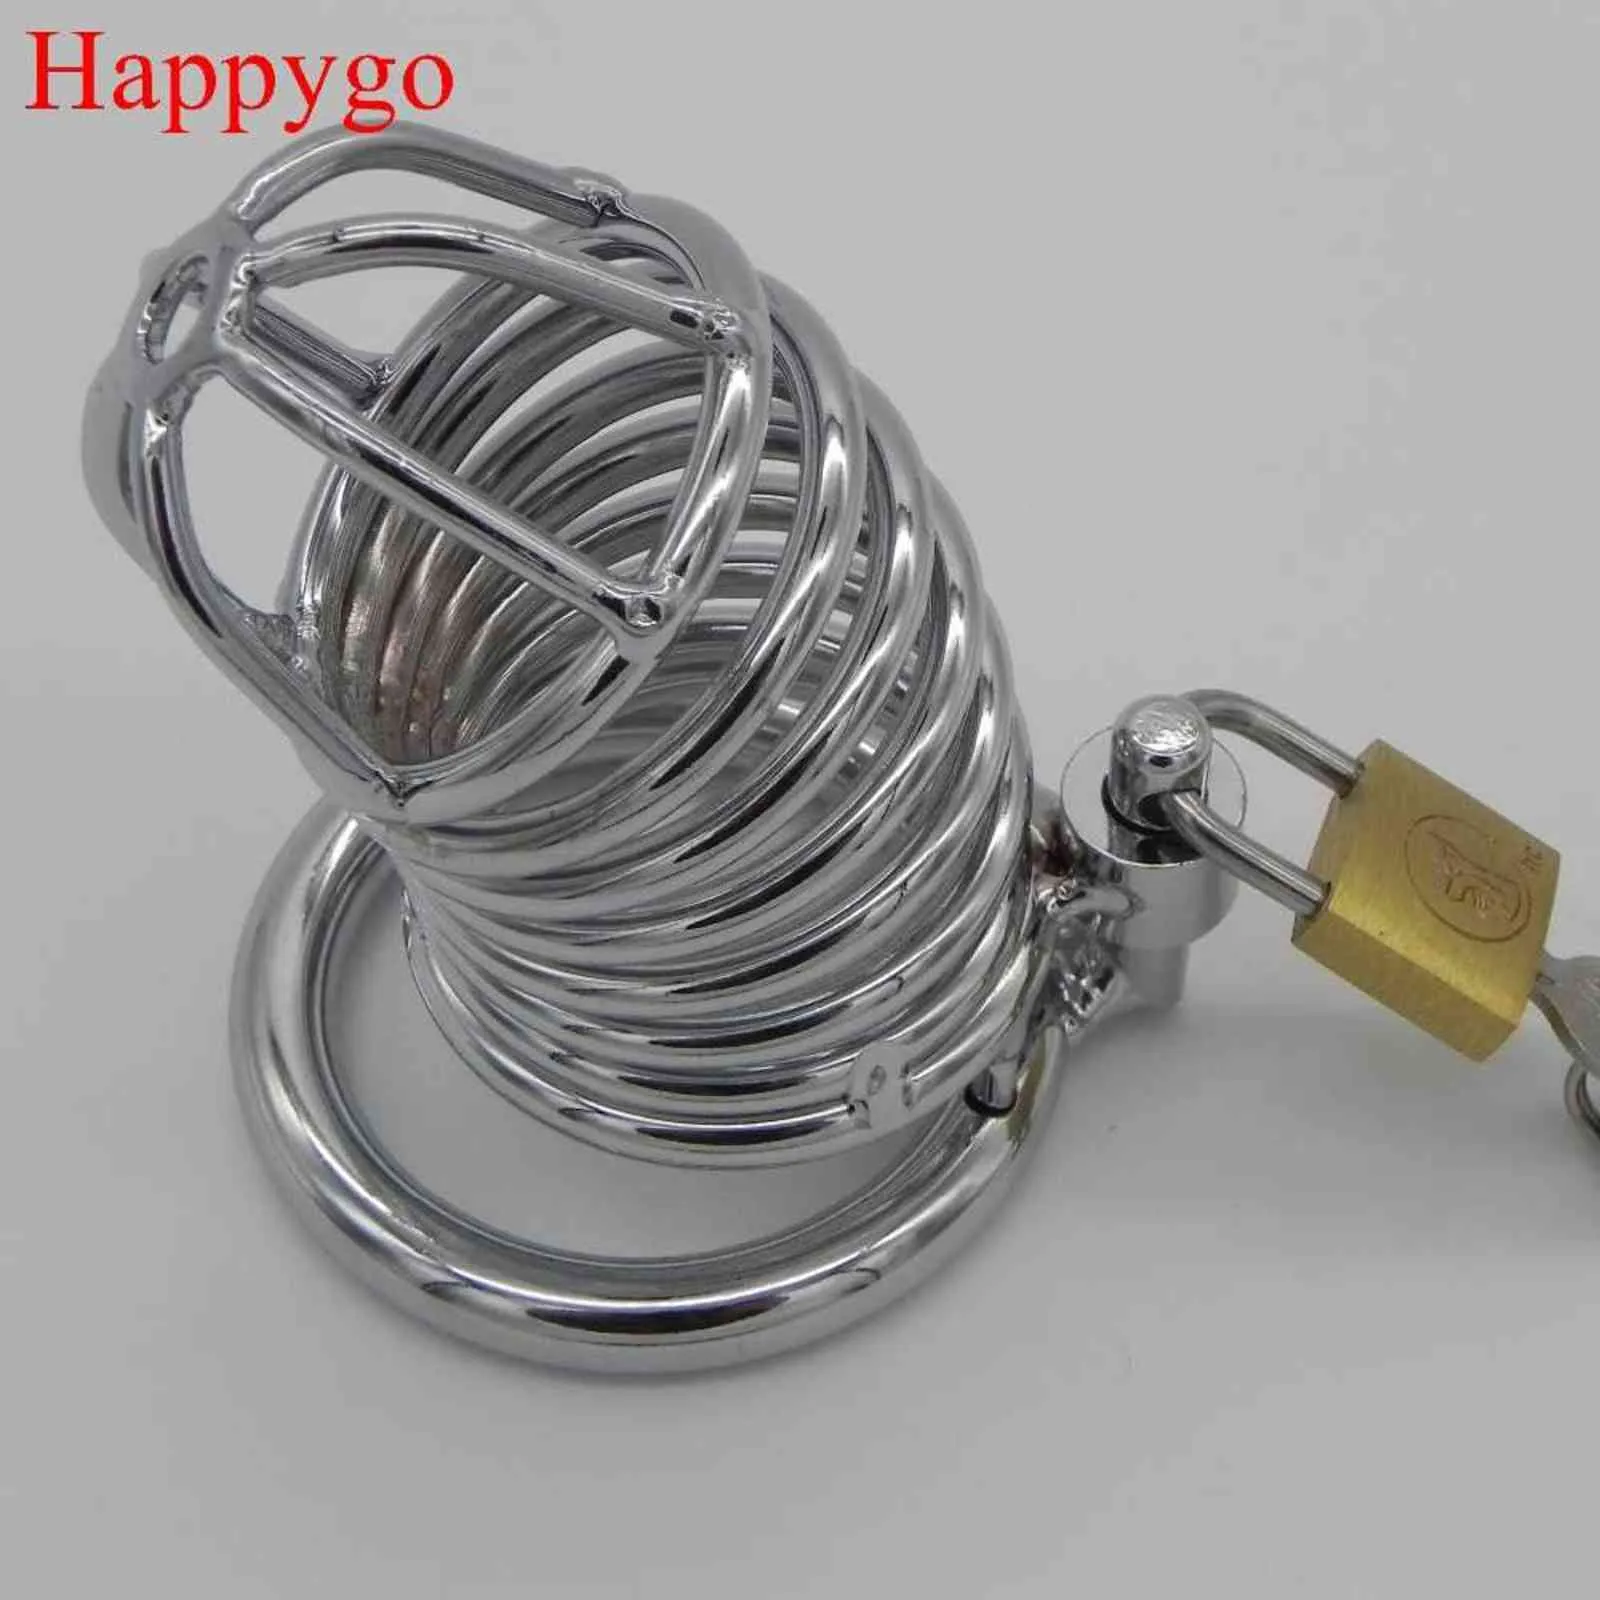 Cockringe Happygo Top Qualität Männliche Metall Keuschheitsgürtel/Käfige Penis Ring Penis Lock Erotikspiele Sexspielzeug M200 1124